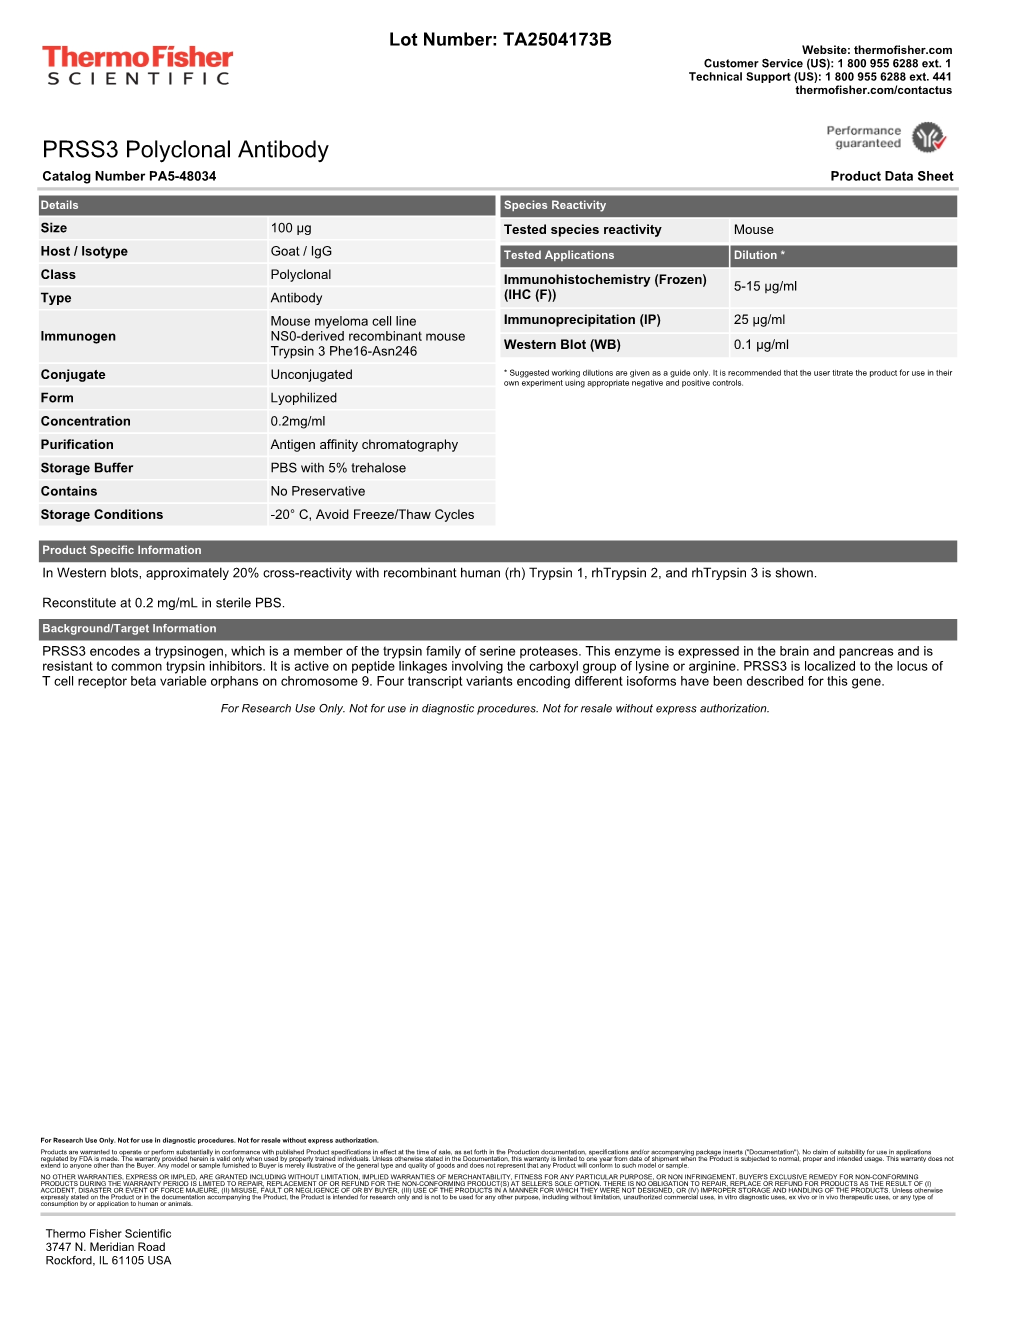 PRSS3 Polyclonal Antibody Catalog Number PA5-48034 Product Data Sheet